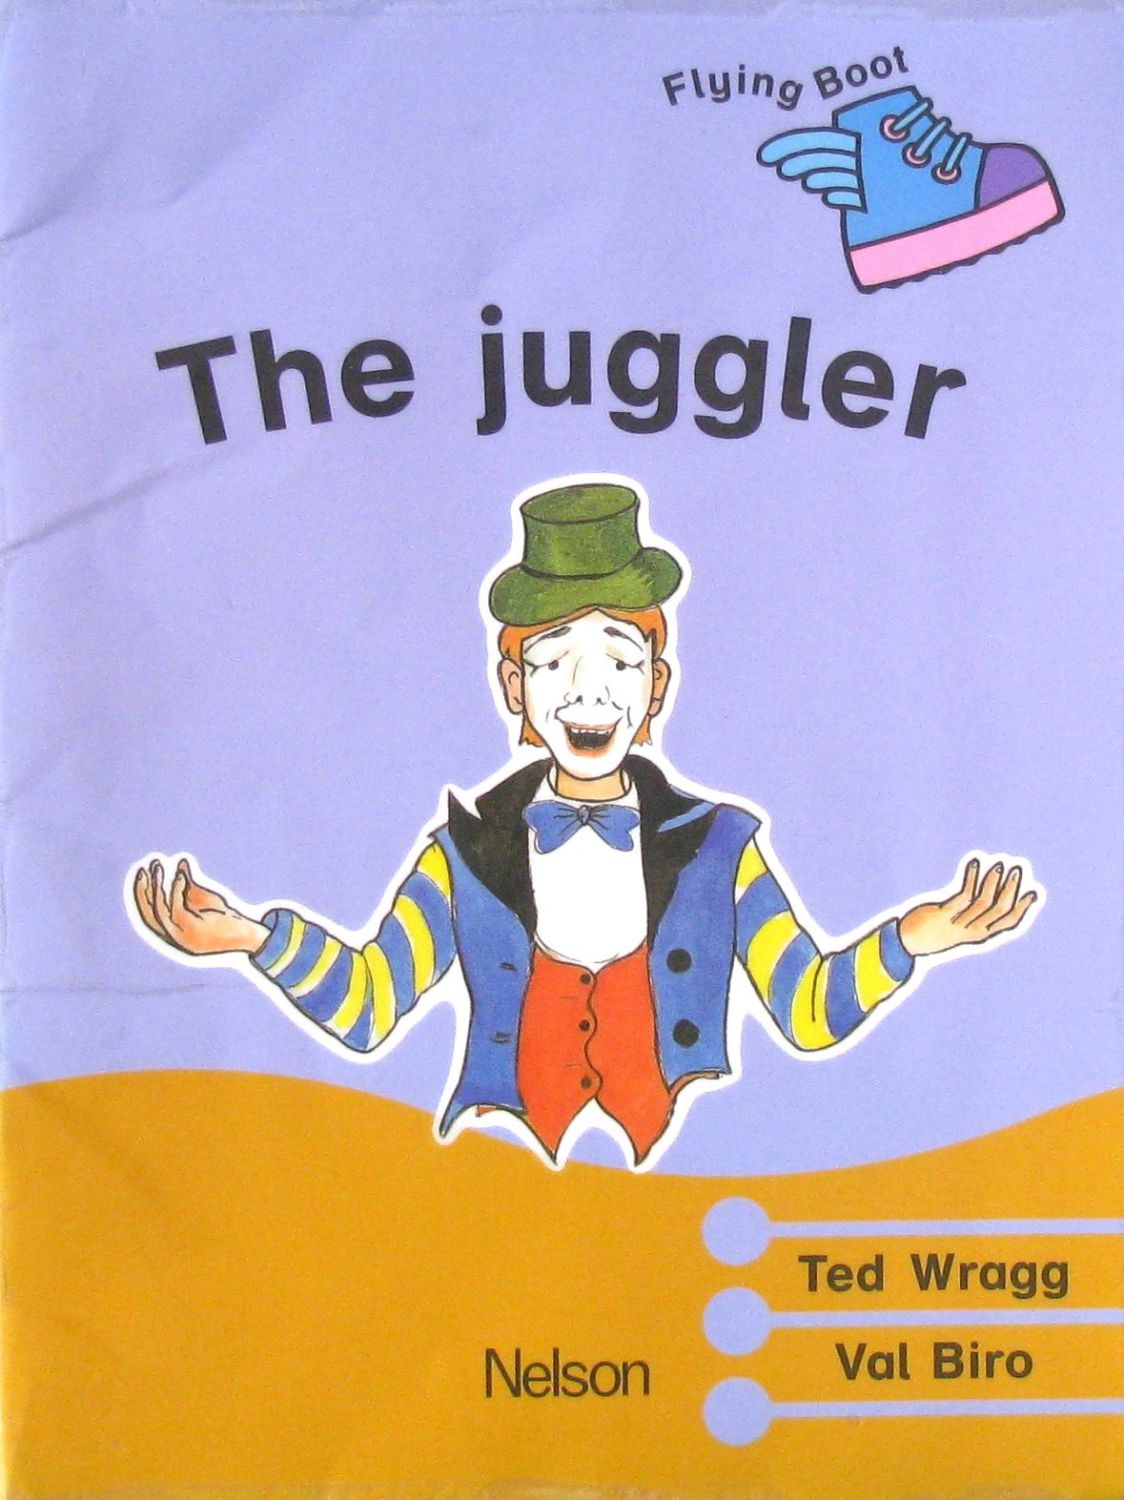 the juggler flying boot